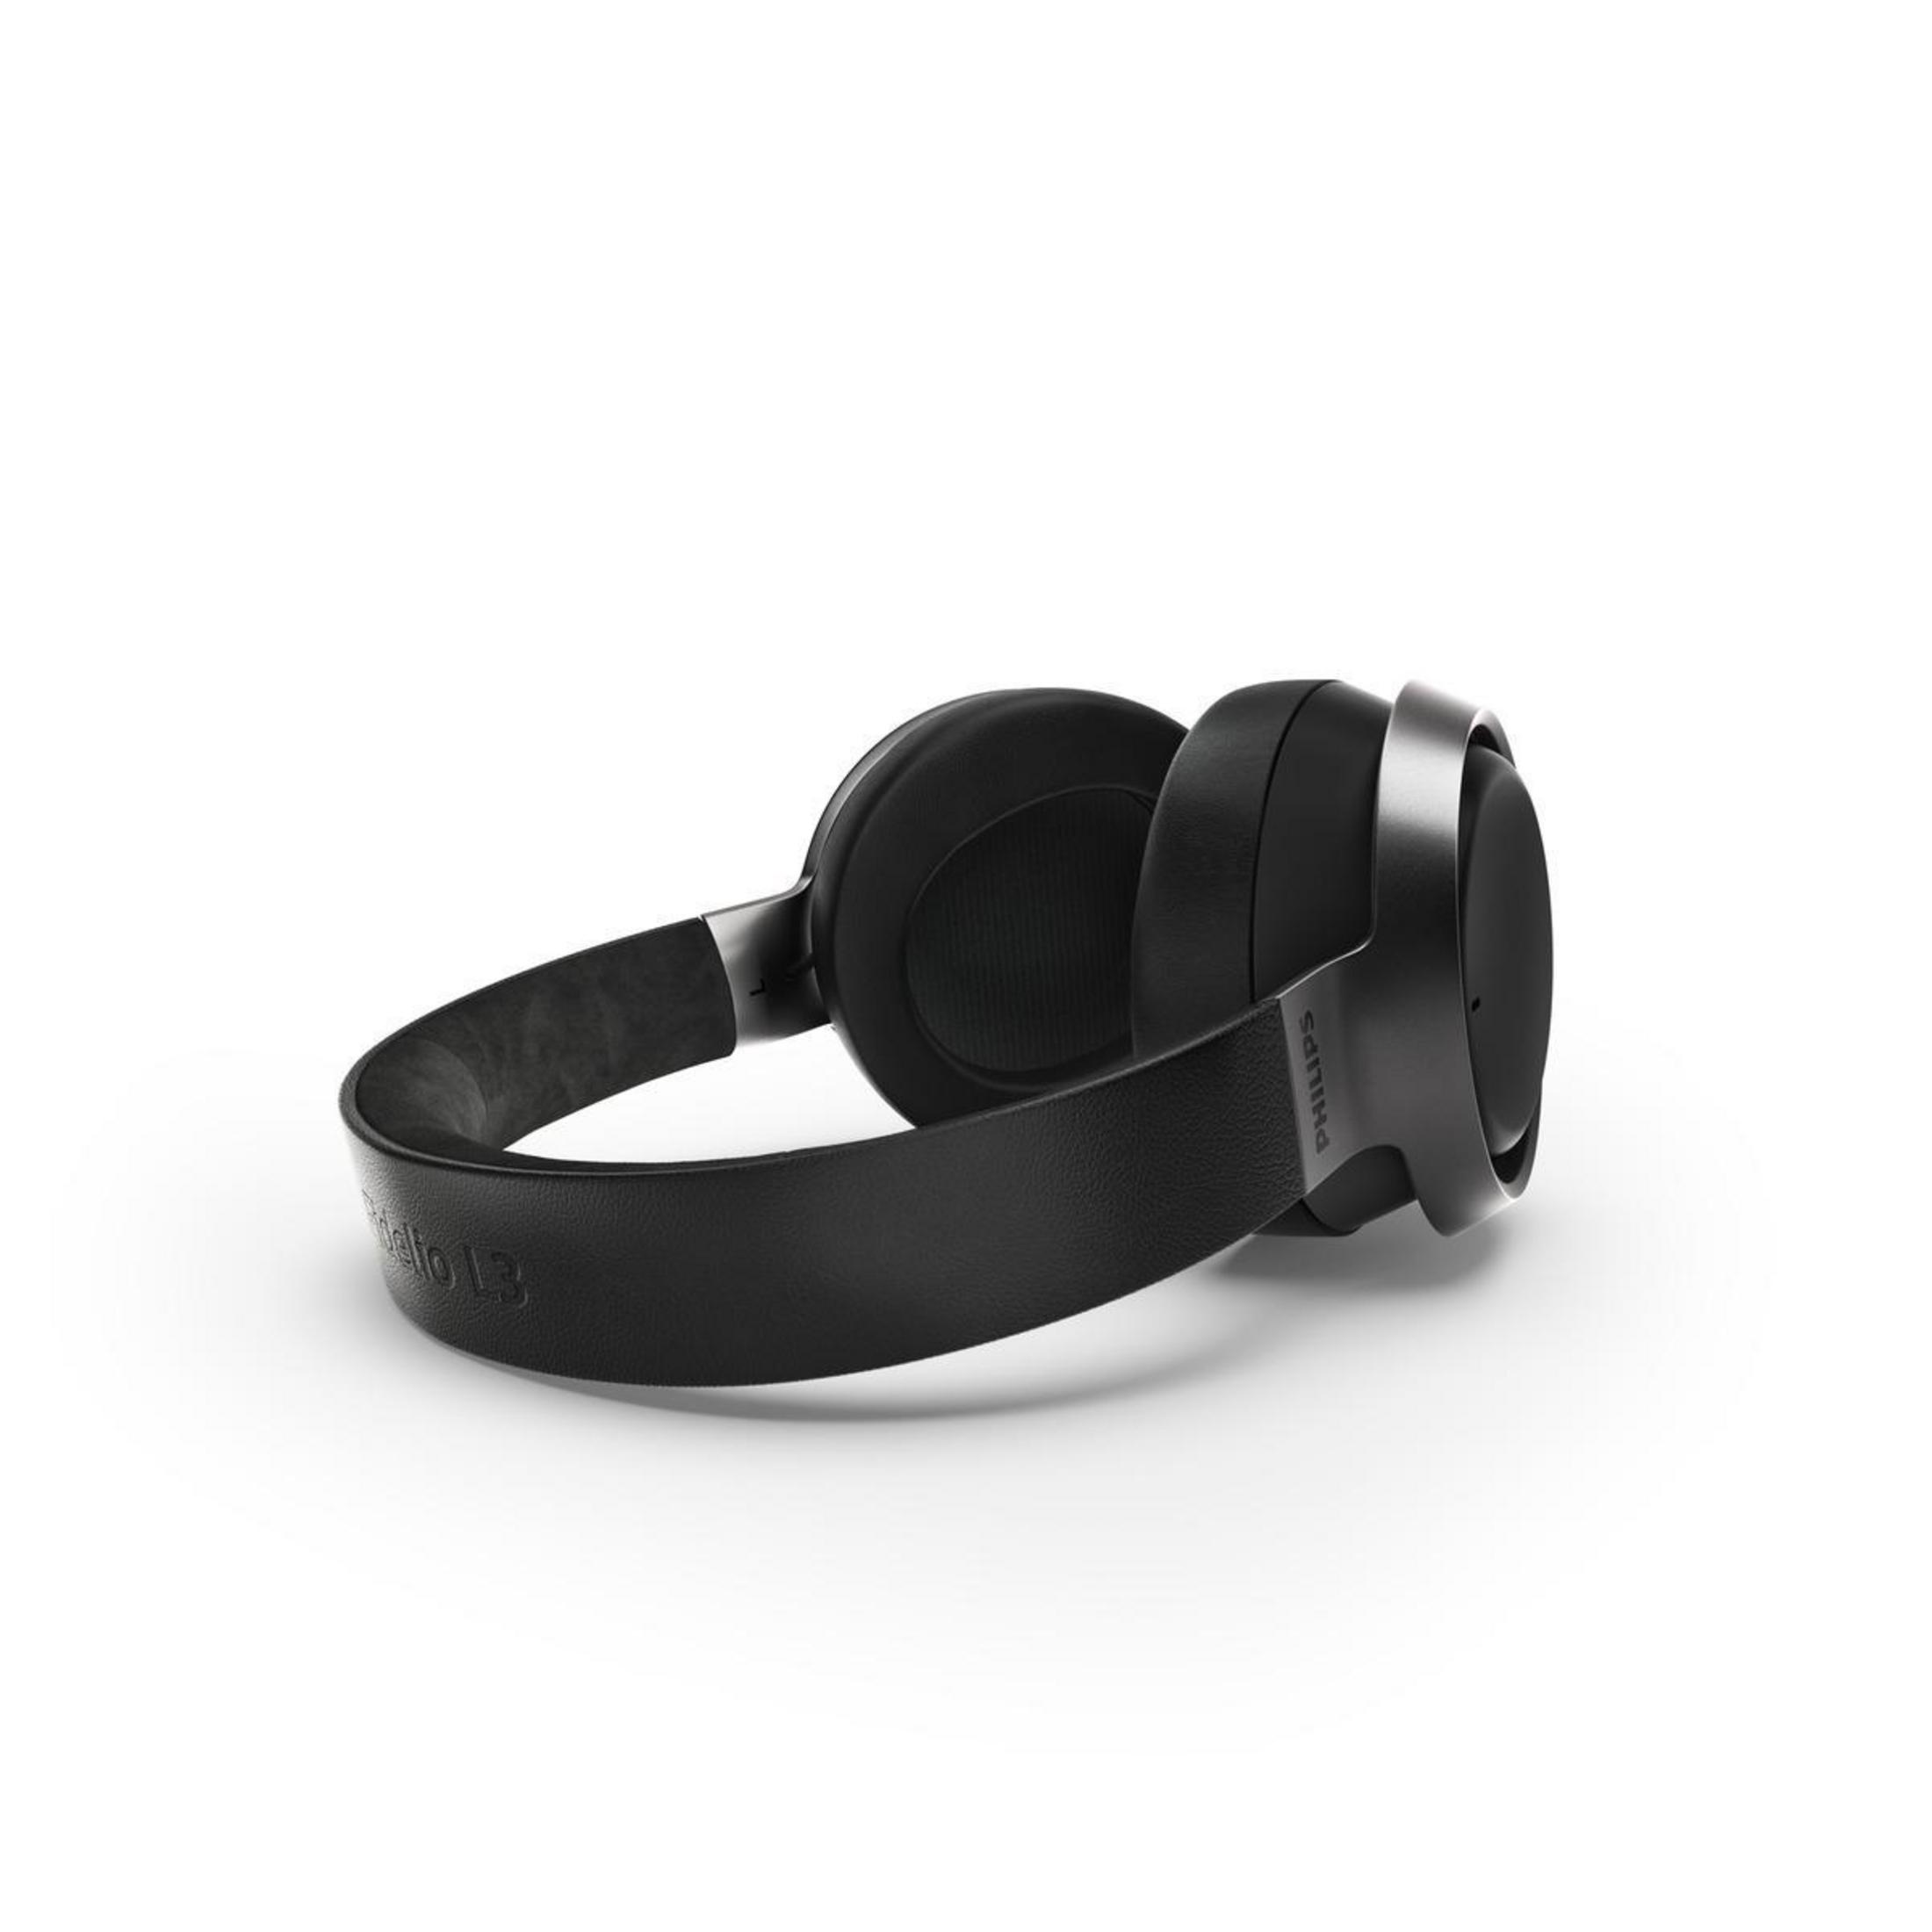 On-ear L3/00, PHILIPS Schwarz Bluetooth Kopfhörer